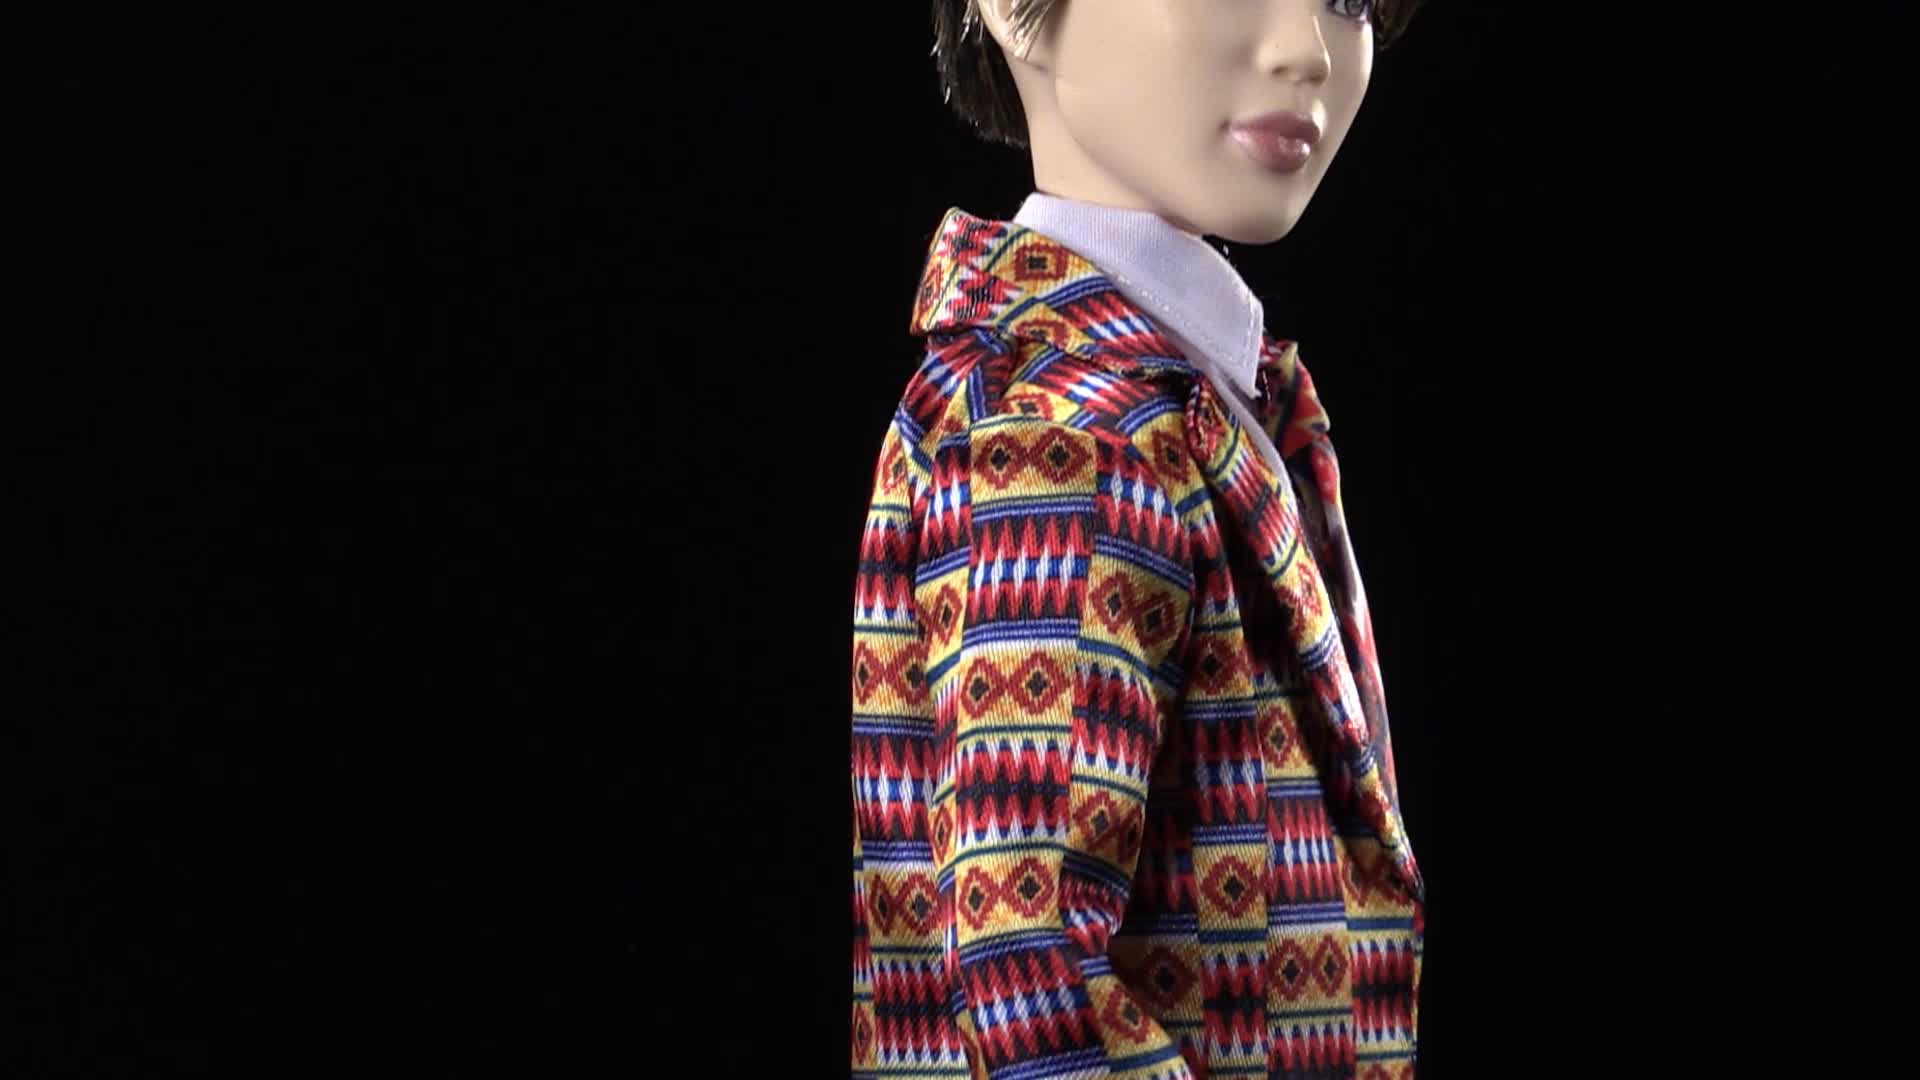 Mattel GKC93 BTS Jimin Idol Fashion Doll for Collectors 28 cm